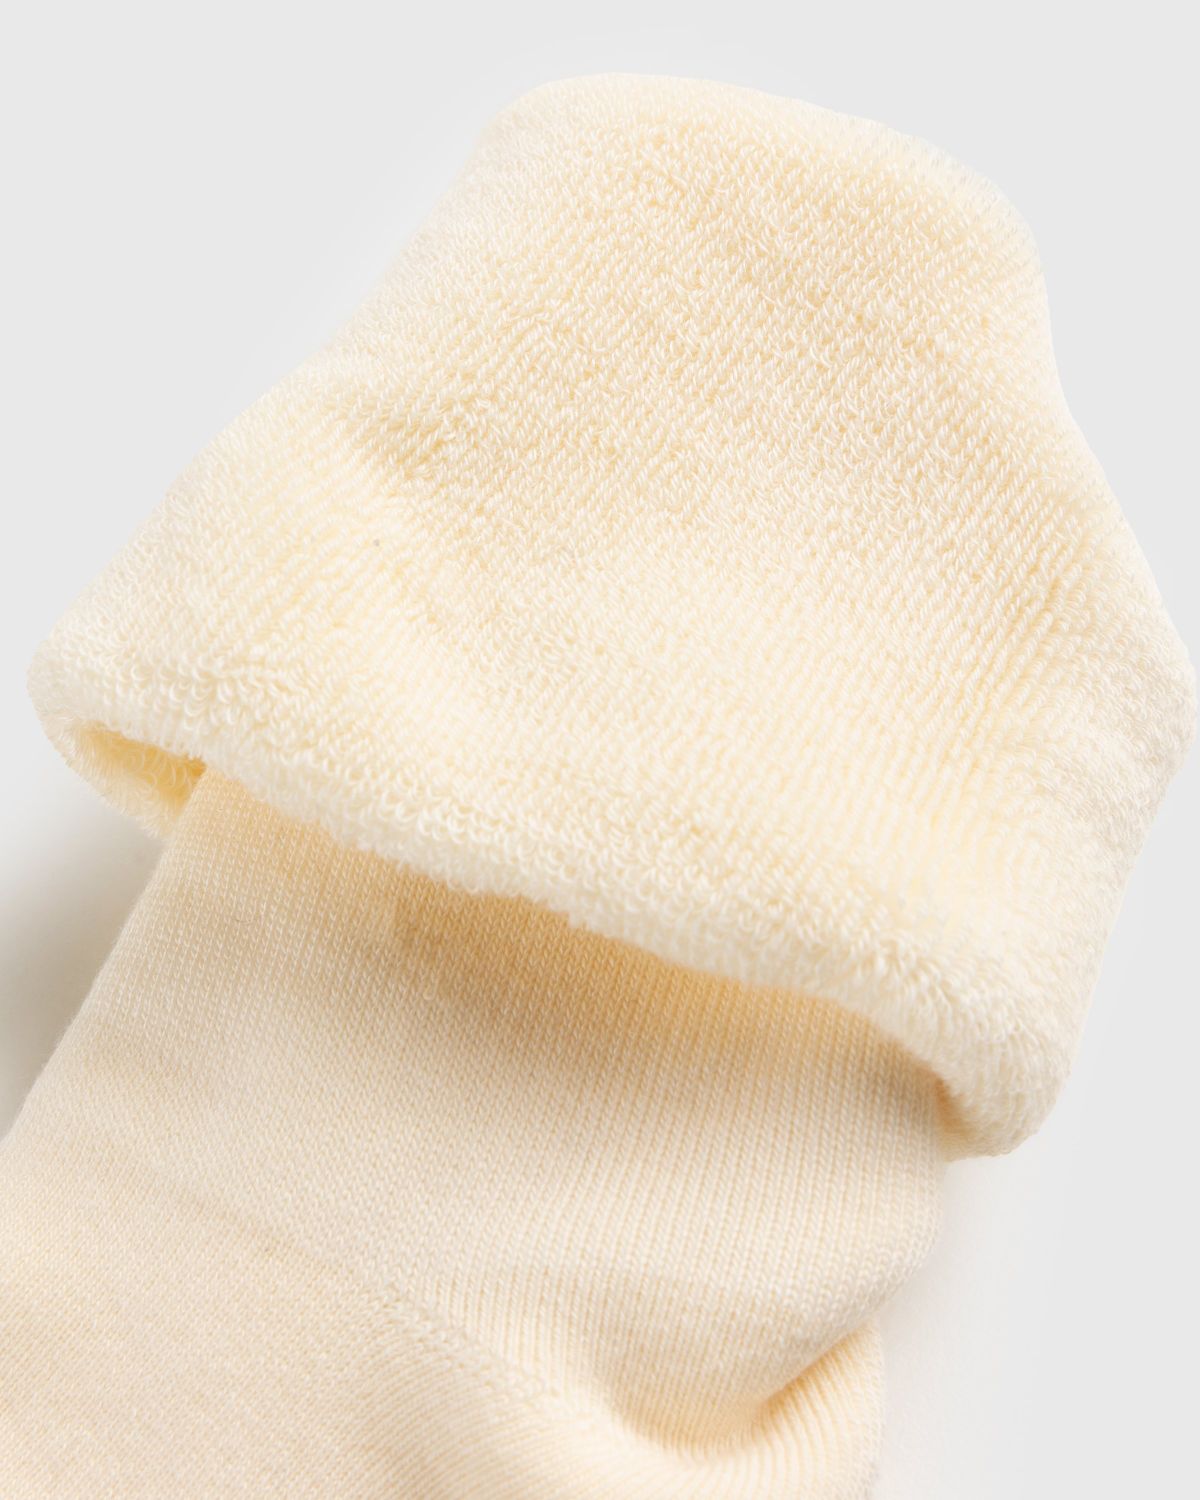 Kenzo – Socks Off White - Socks - Beige - Image 3